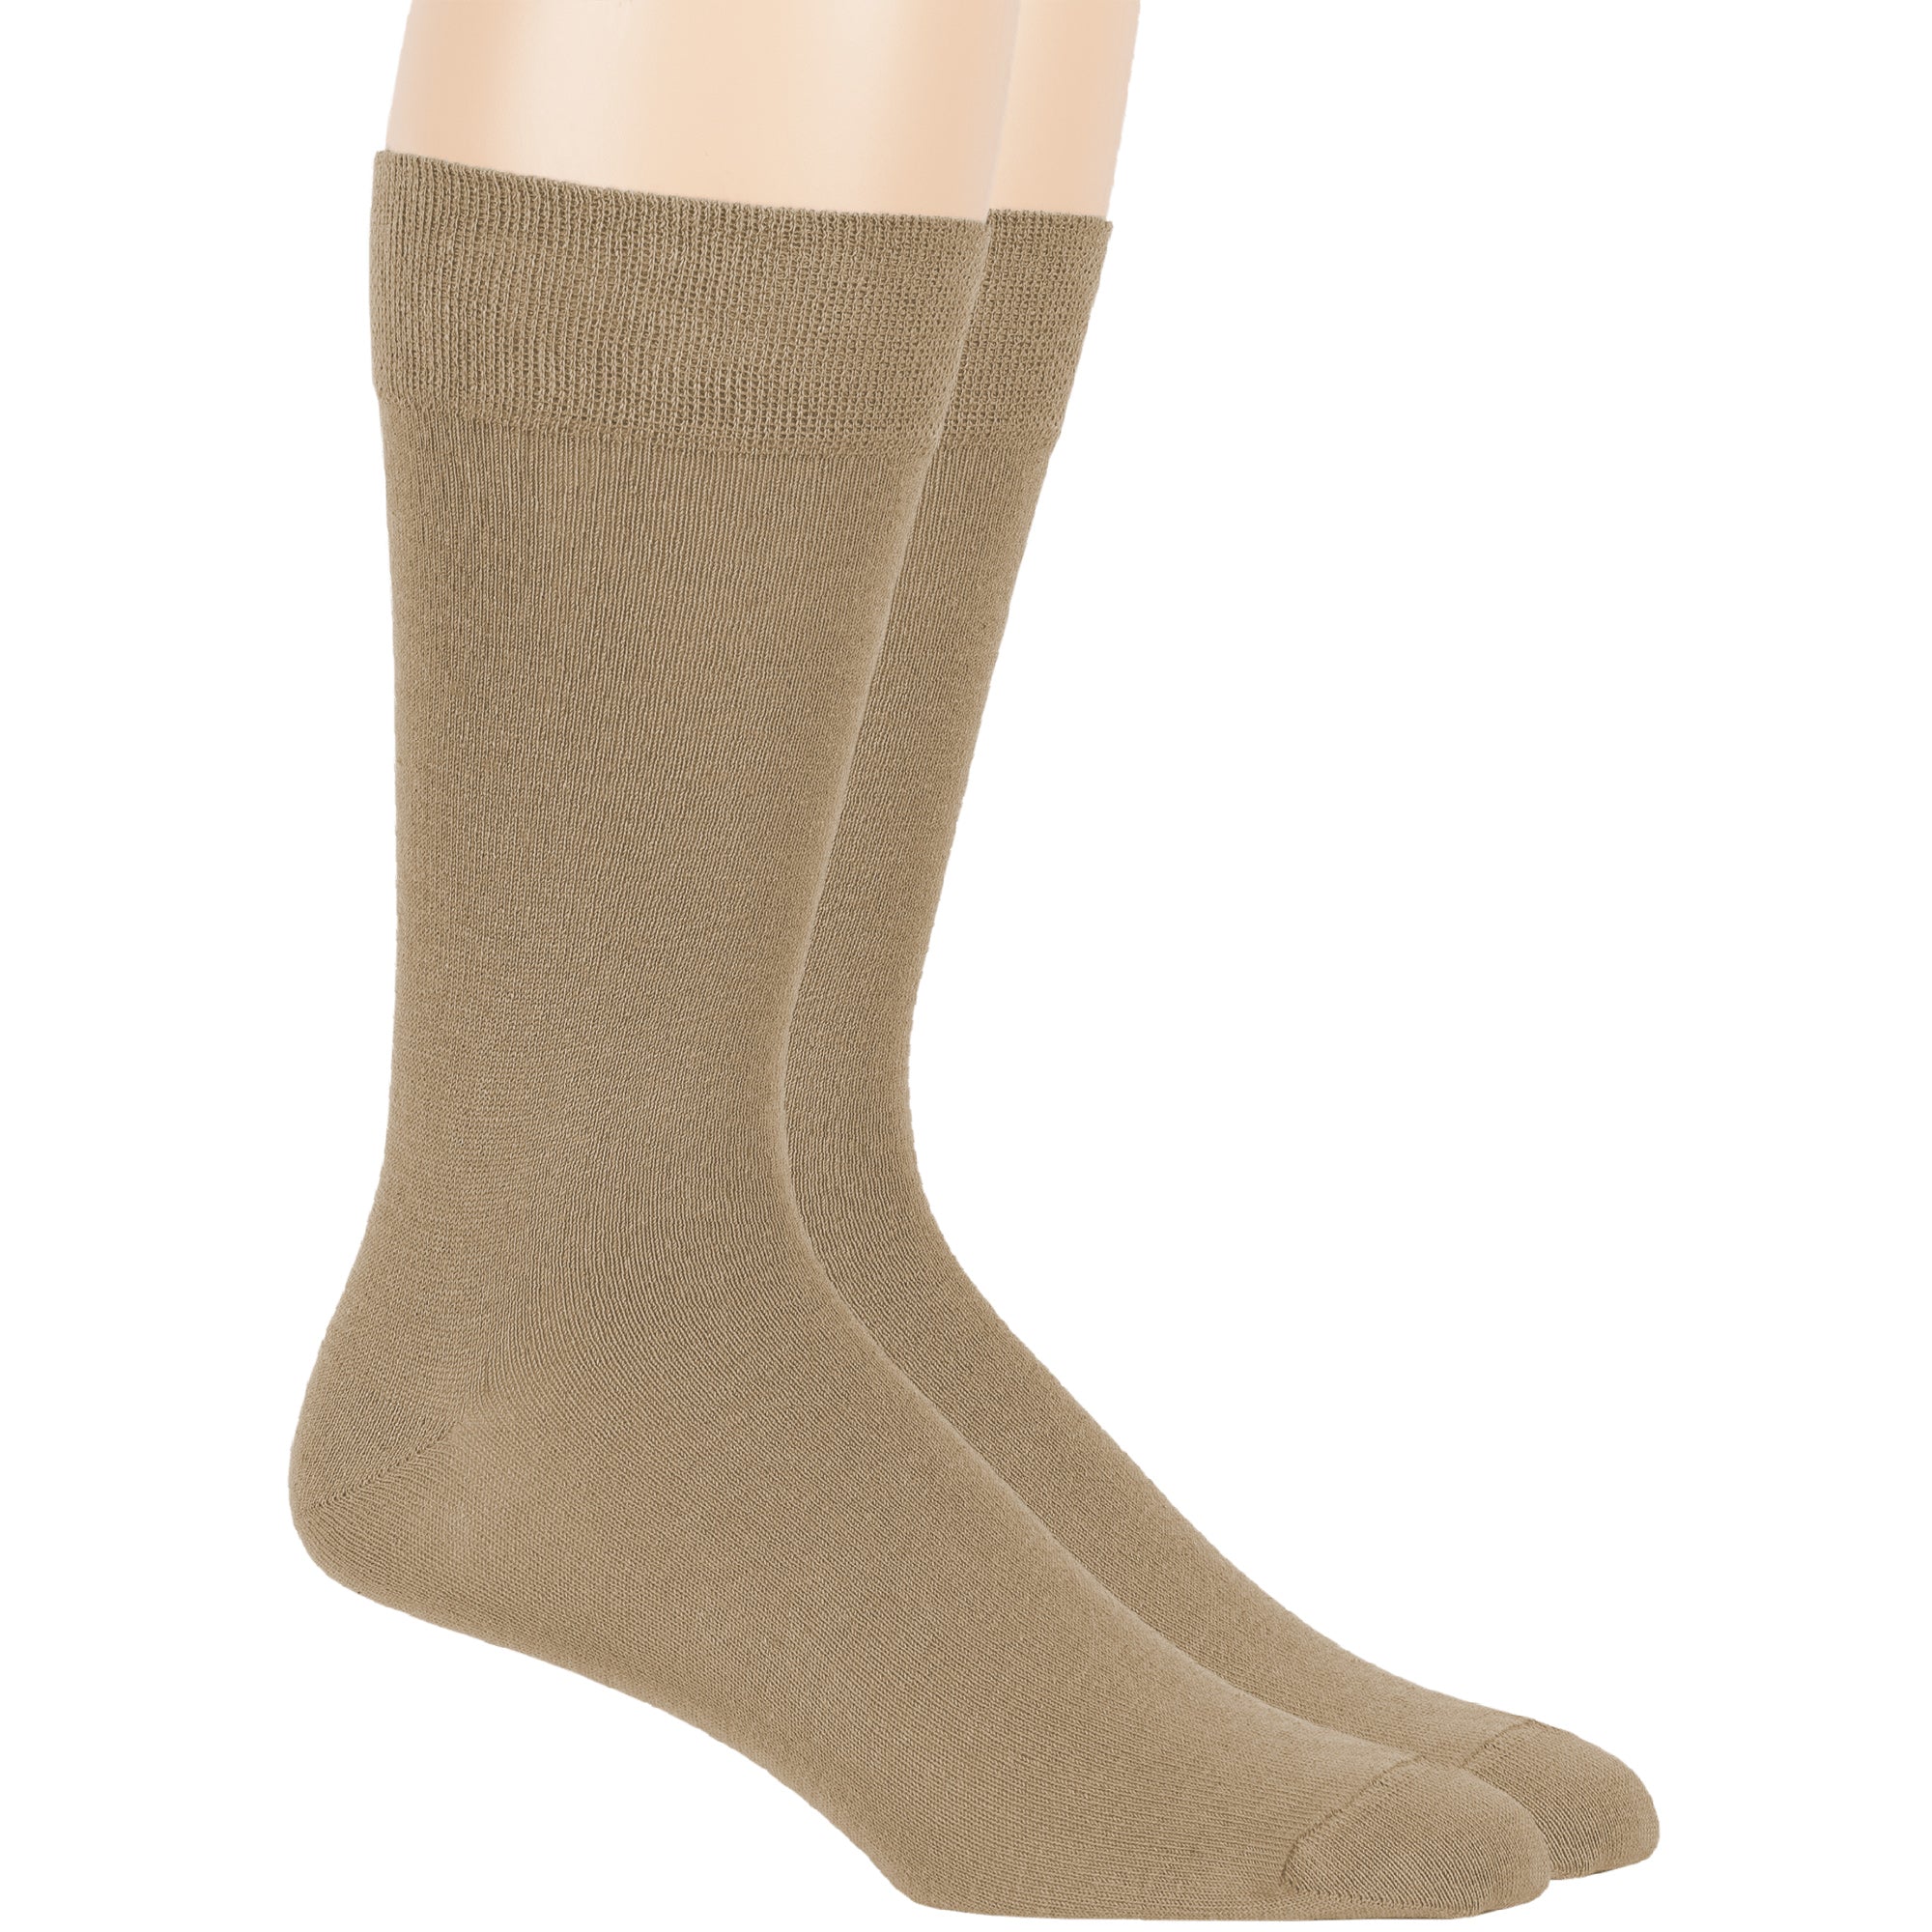 Multicolored Men's Cotton Socks Pack of 6 Size 43-46 – Veluncia